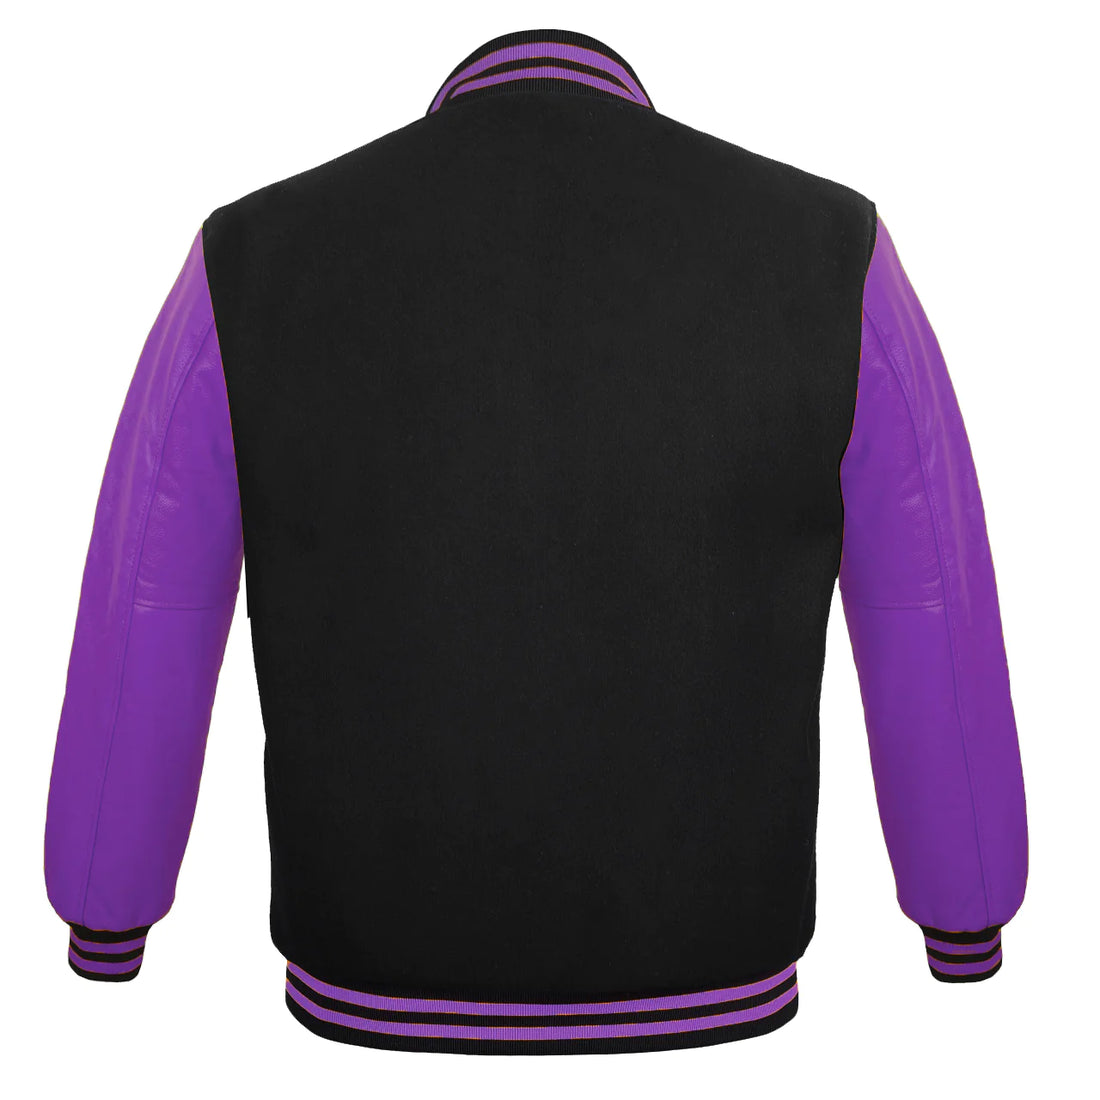 Men Black Wool & Purple Real Leather Varsity Jacket